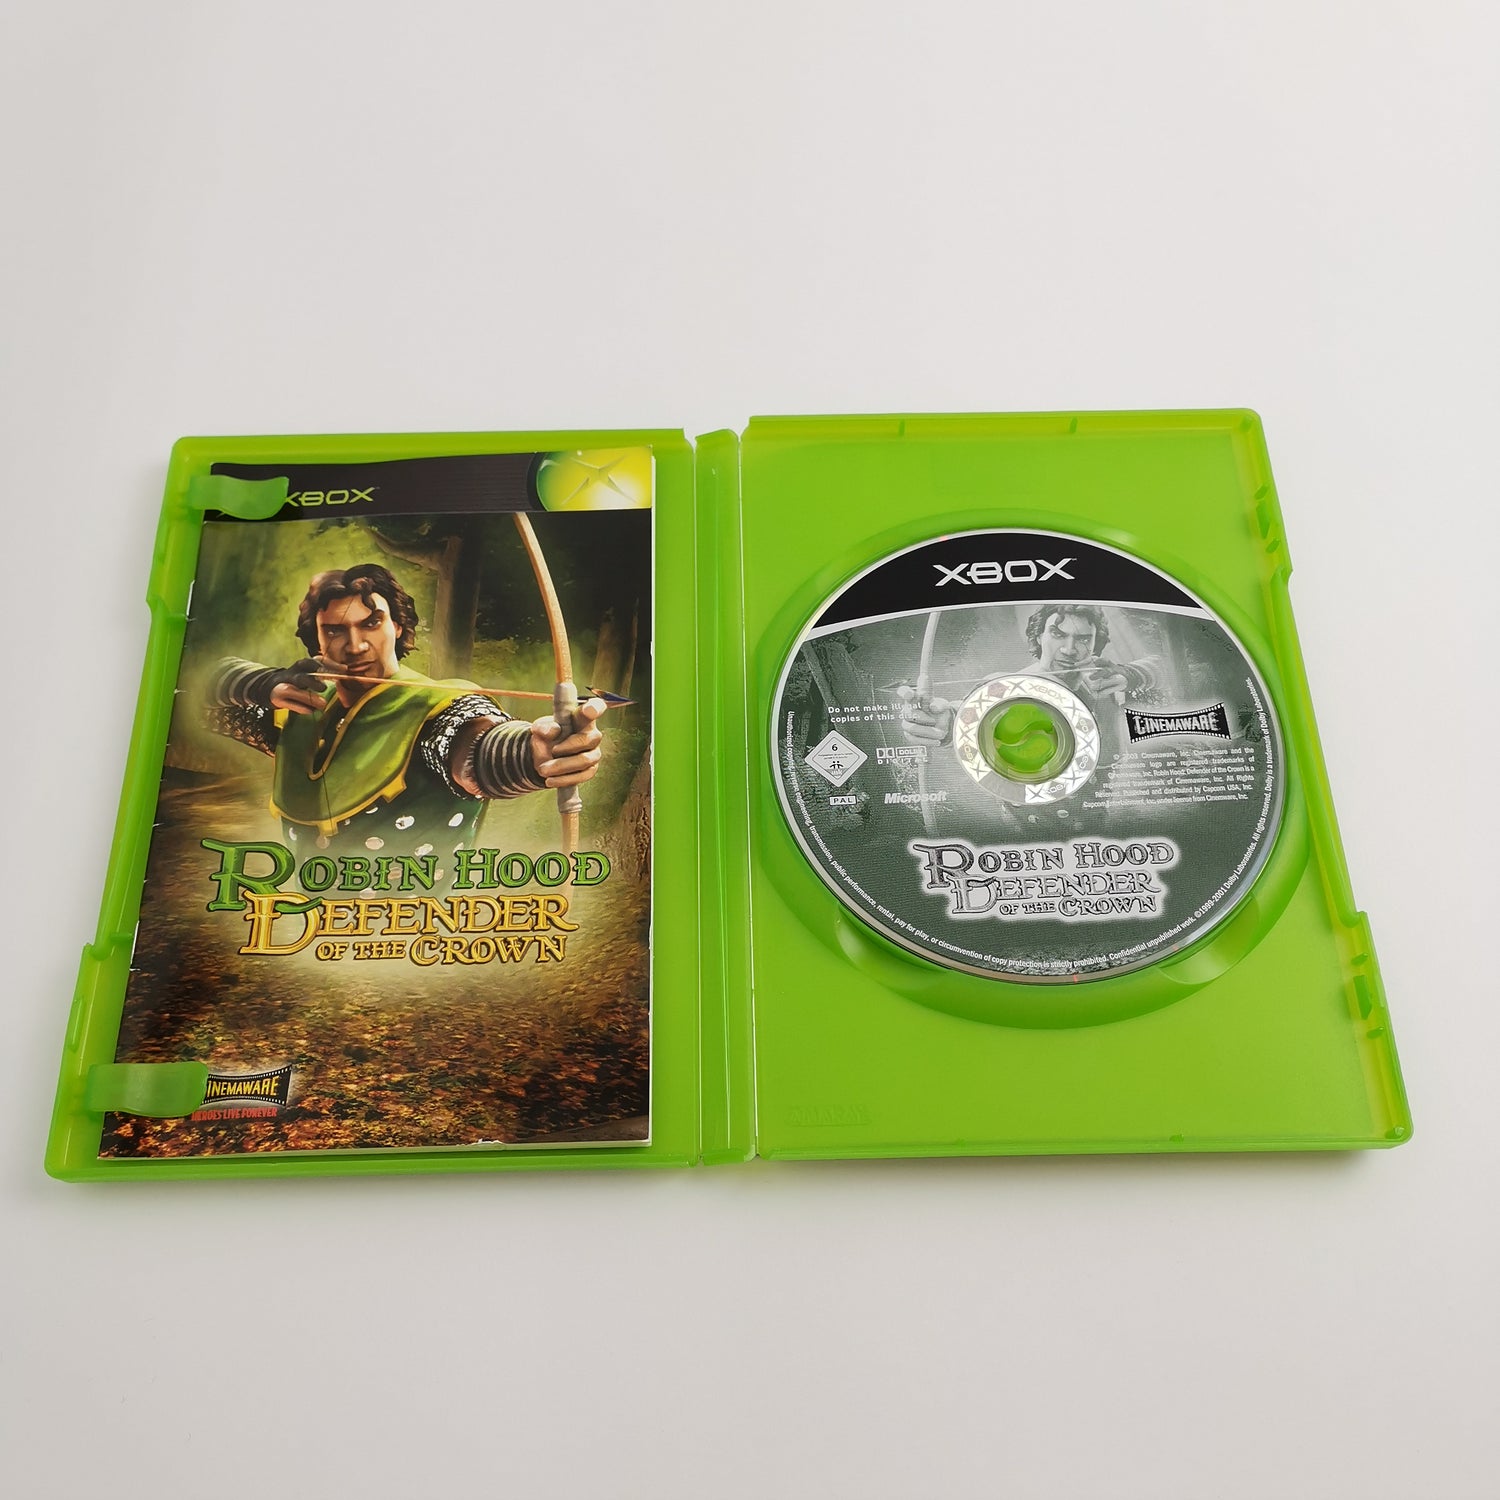 Microsoft Xbox Classic game 